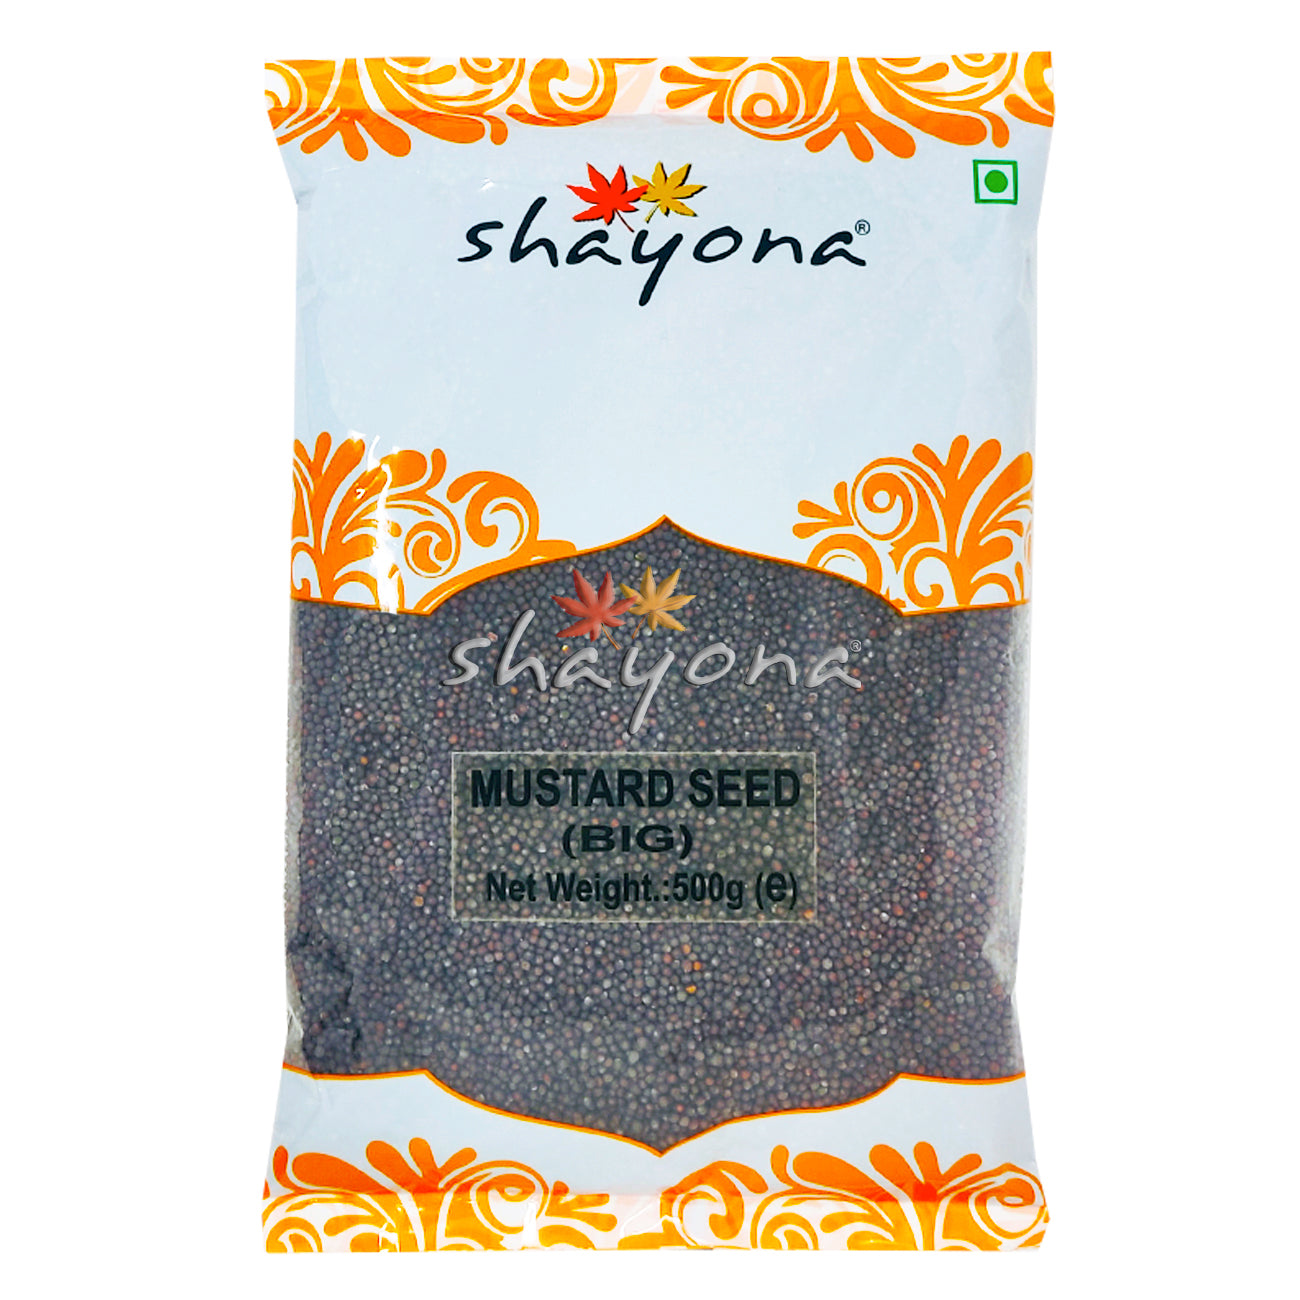 Shayona Black Mustard Seeds Large